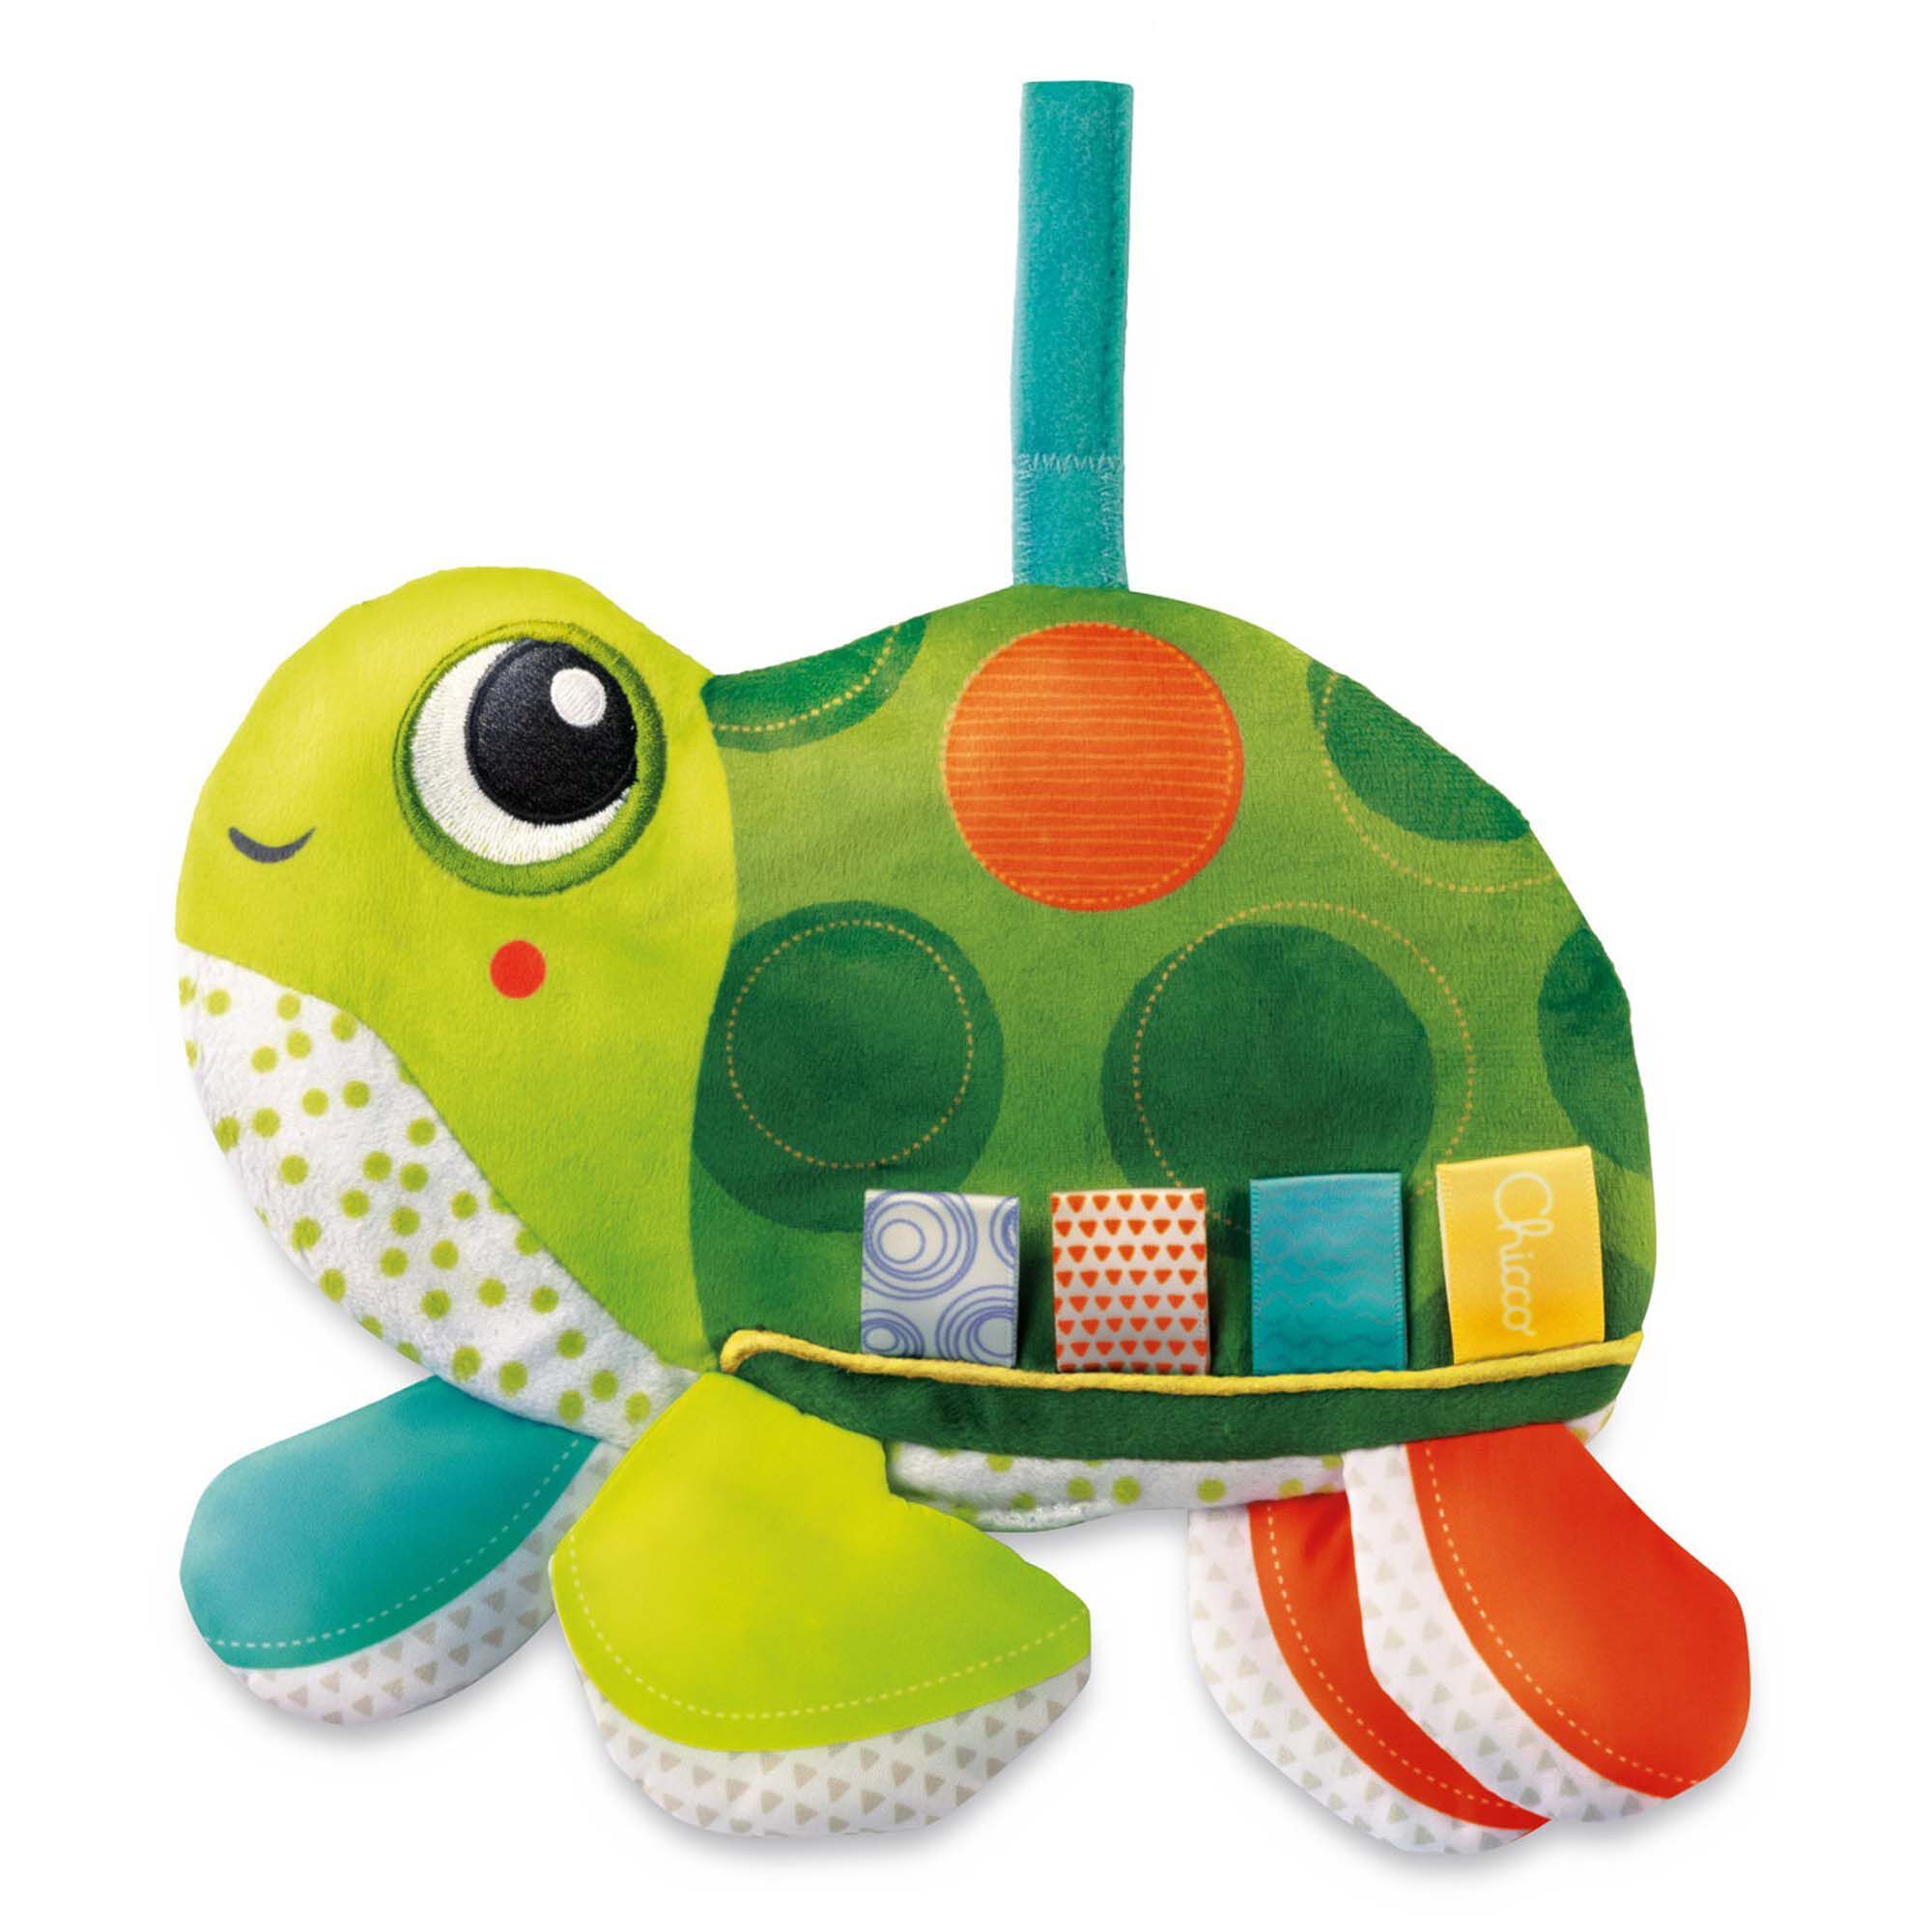 Chicco Chicco knisper speeltje turtle